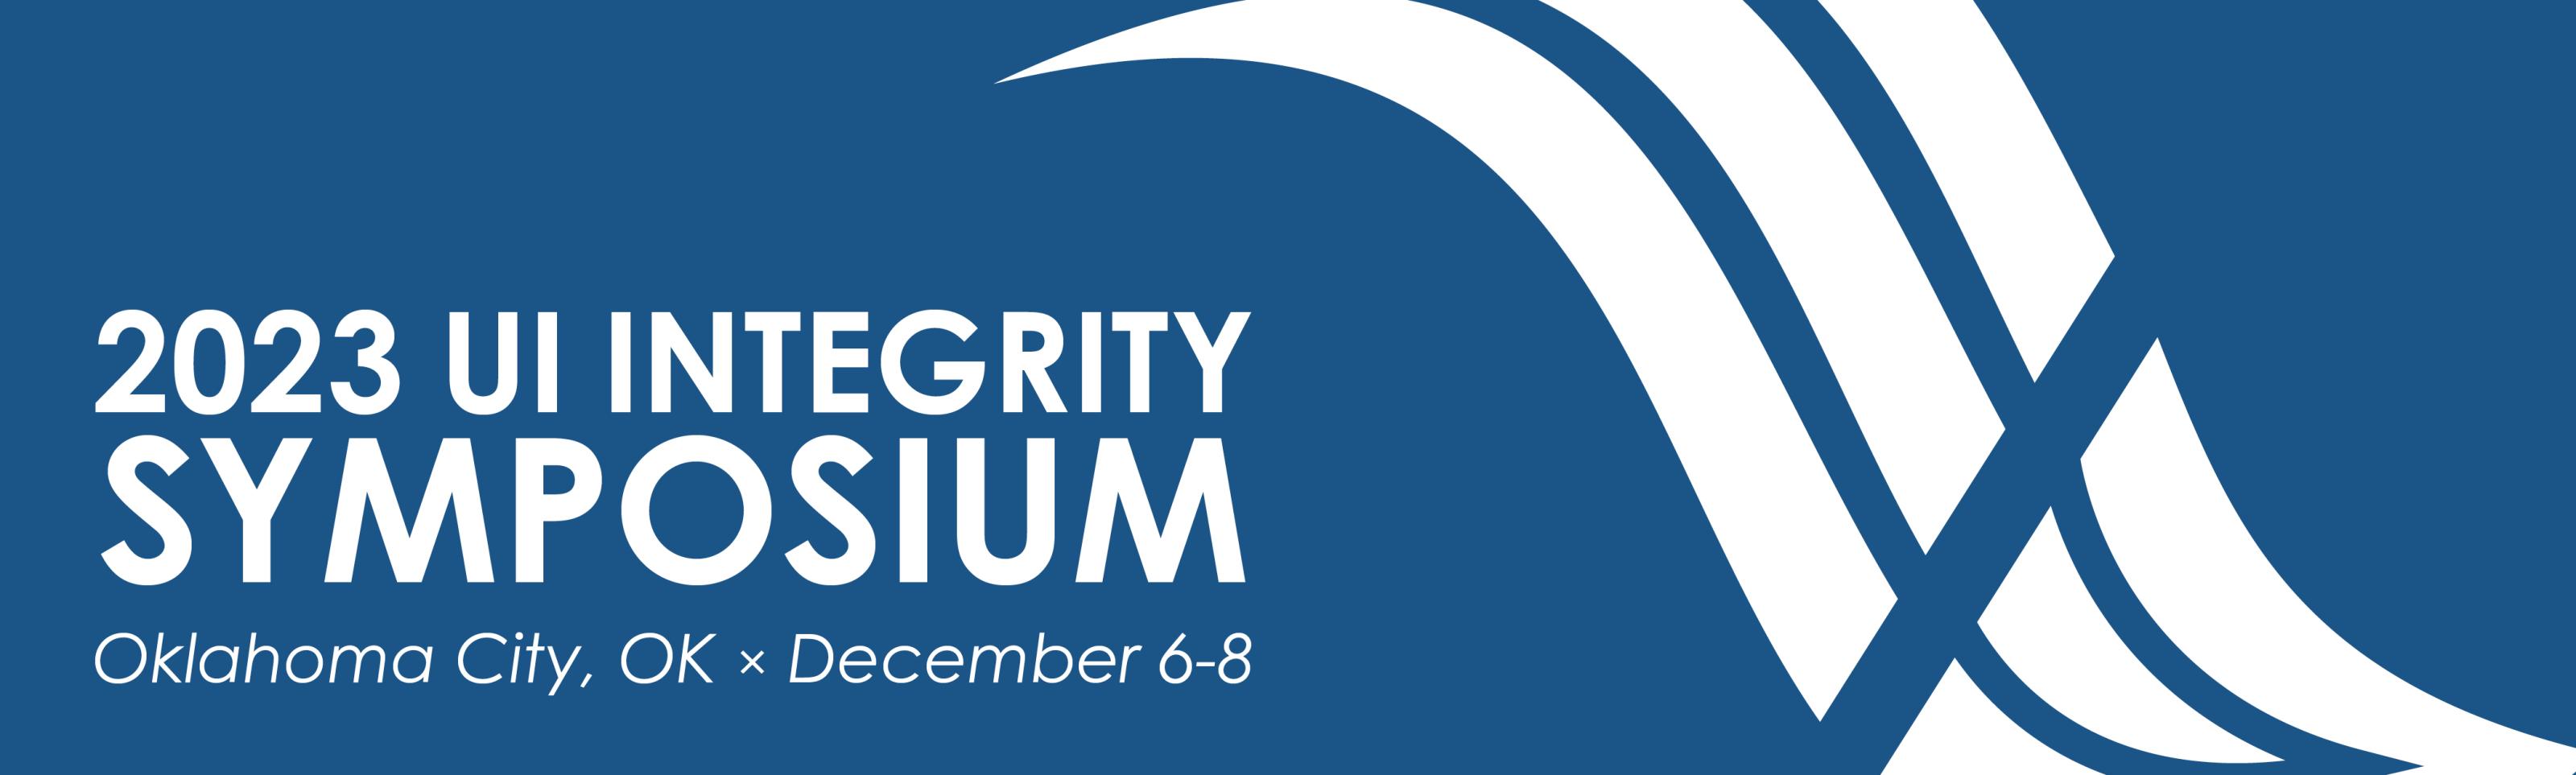 2023 UI Integrity Symposium | December 6 - 8, 2023 Oklahoma City, OK